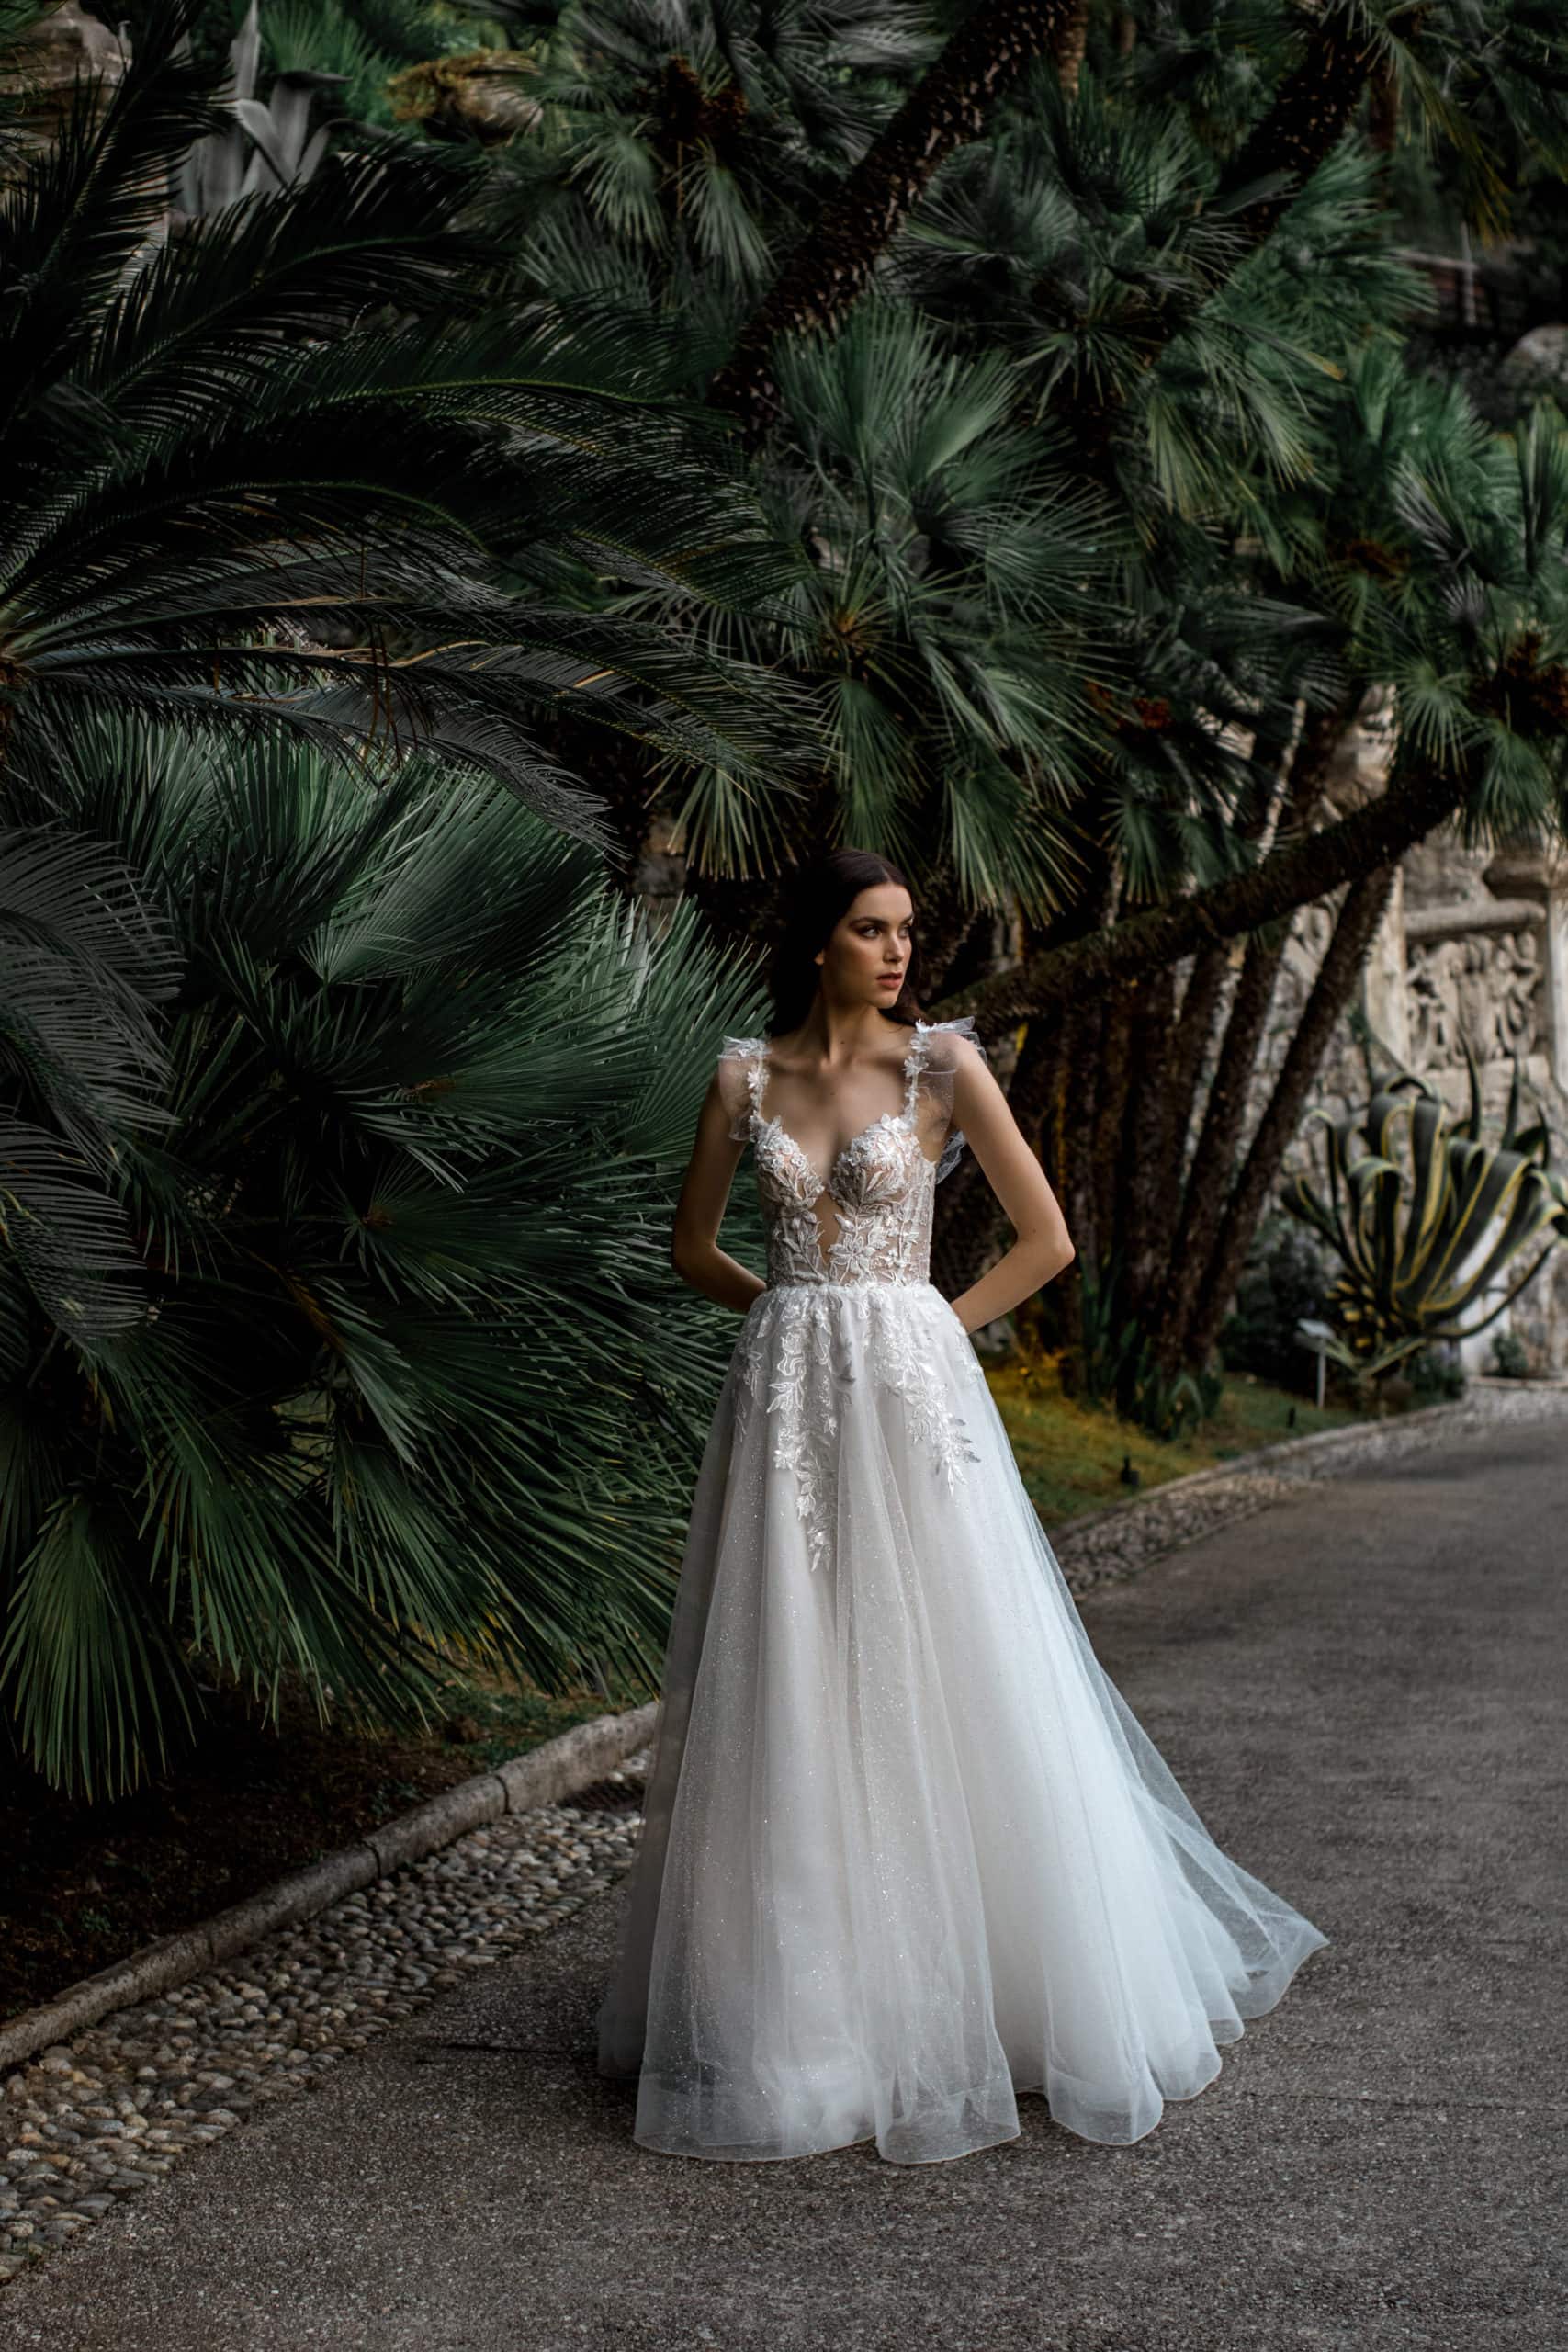 Model walks in bridal gown with full tulle skirt